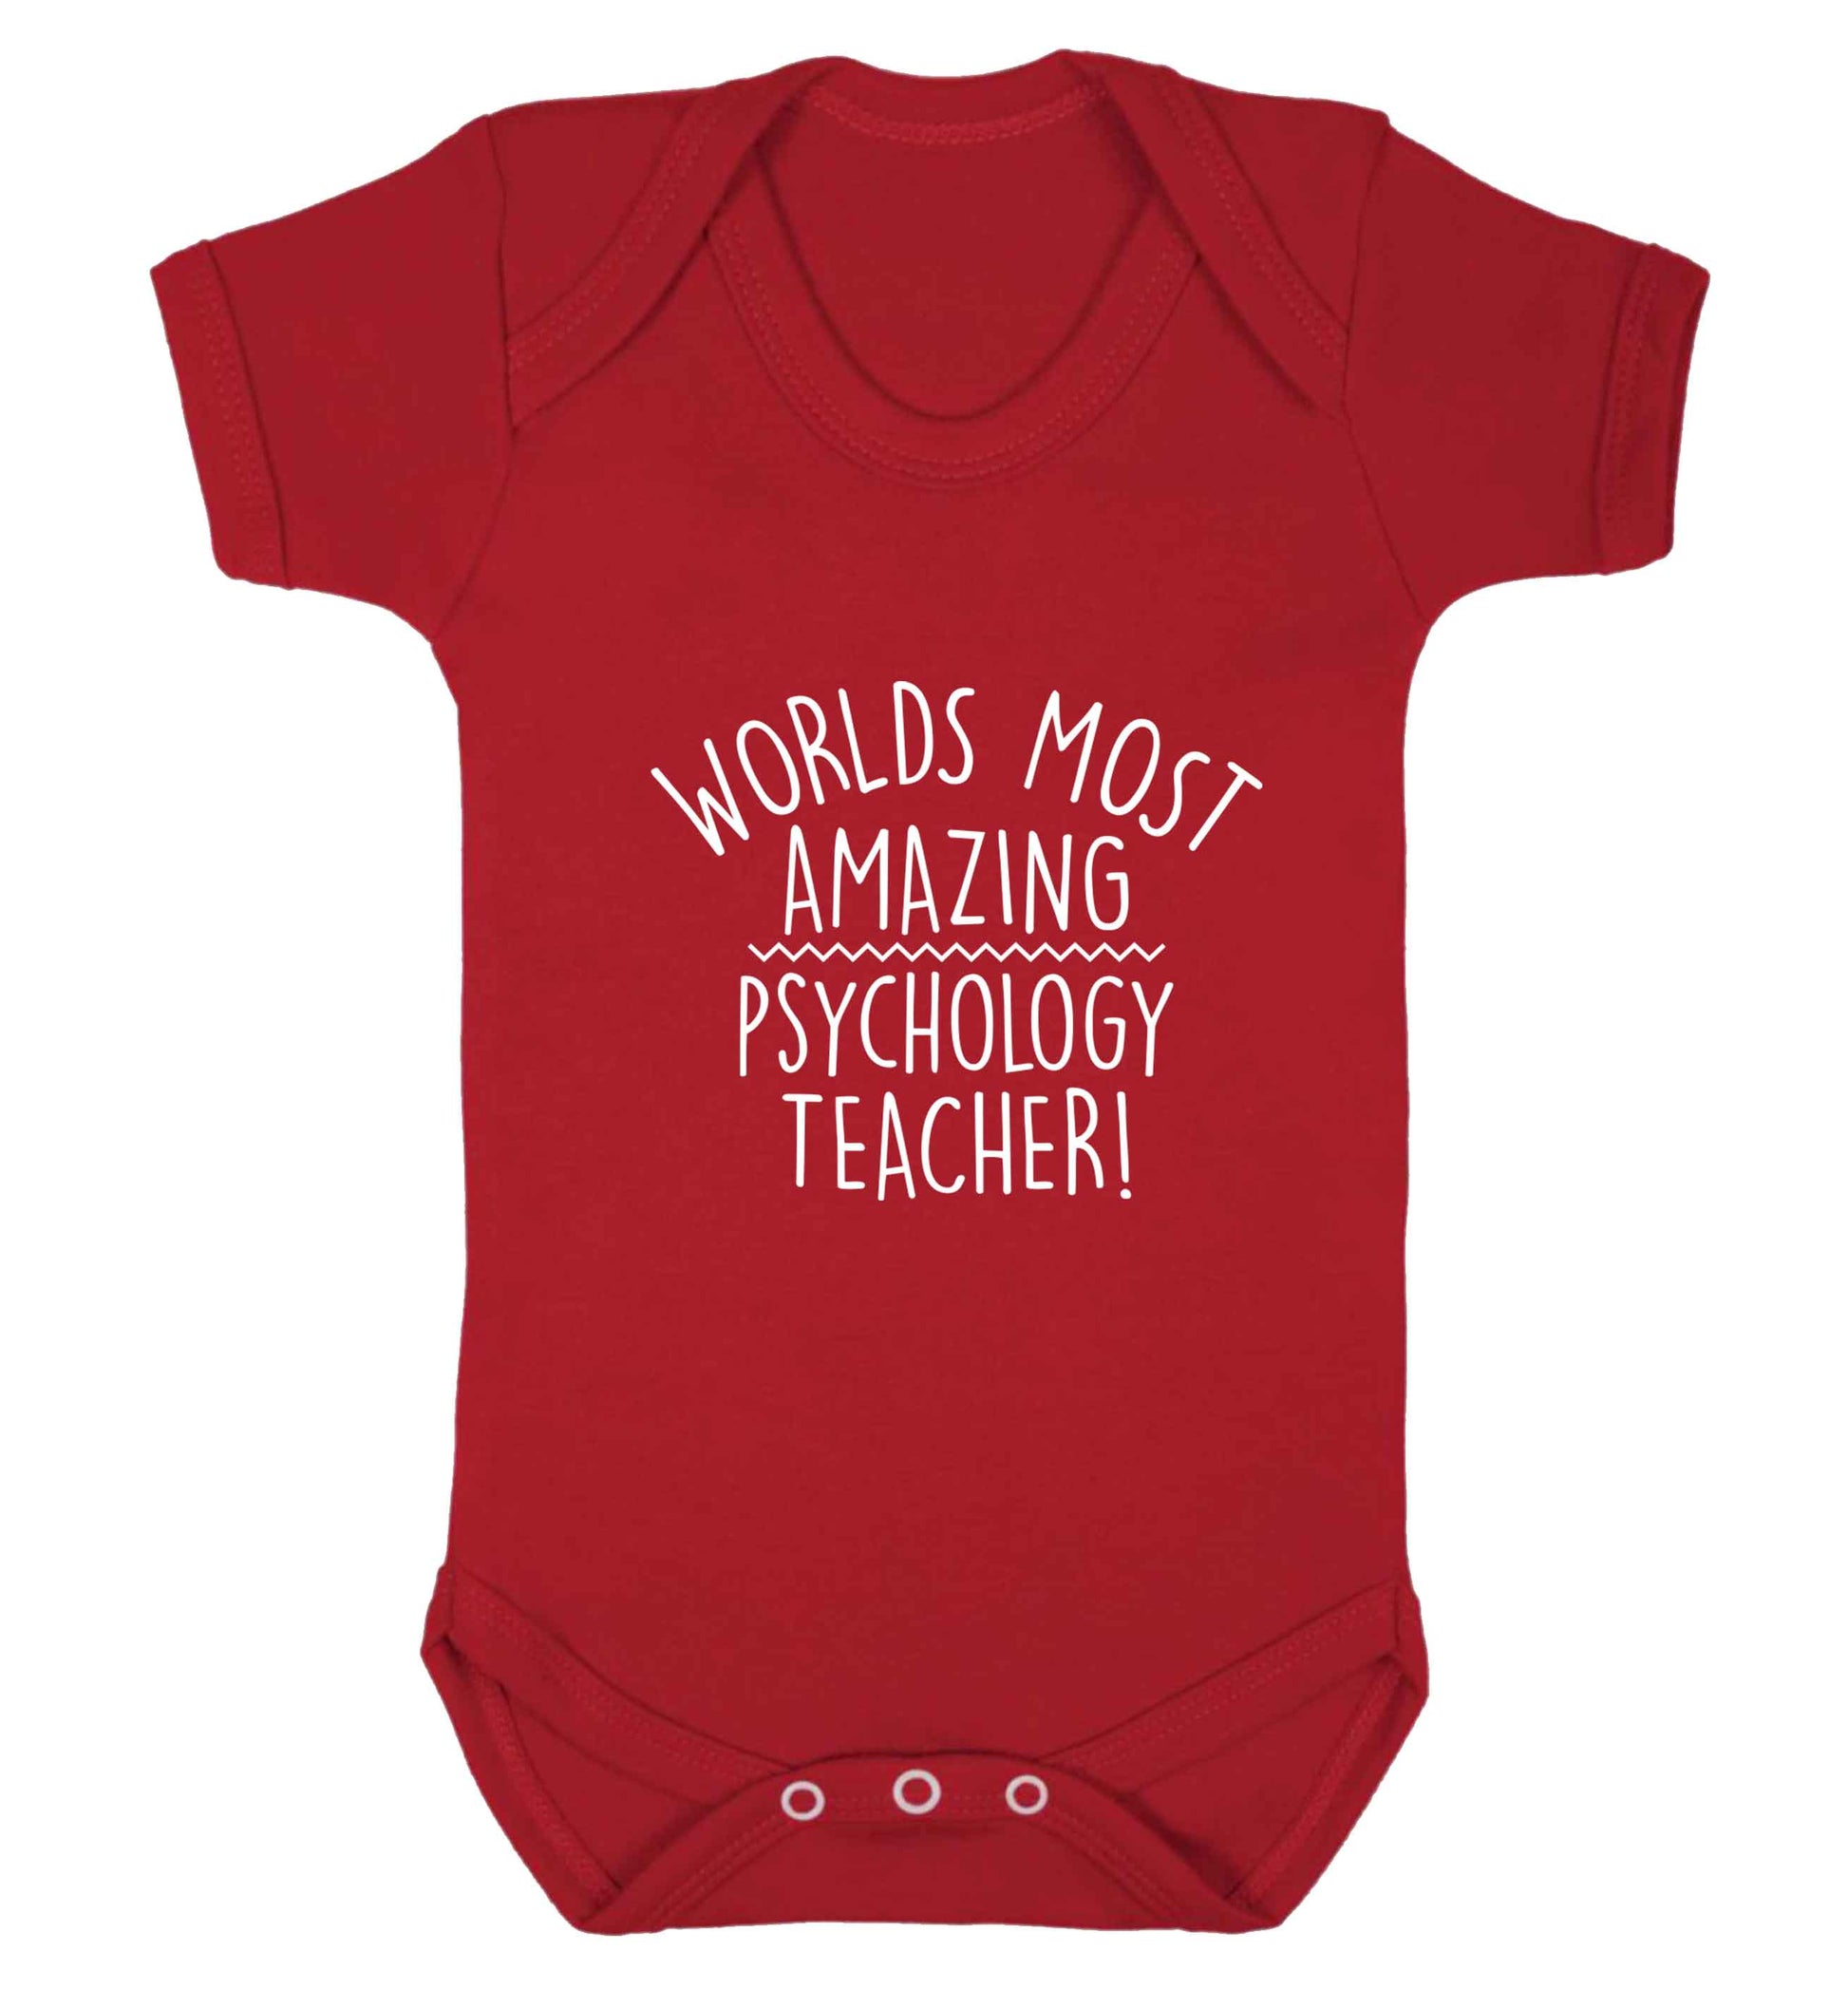 Worlds most amazing psychology teacher baby vest red 18-24 months